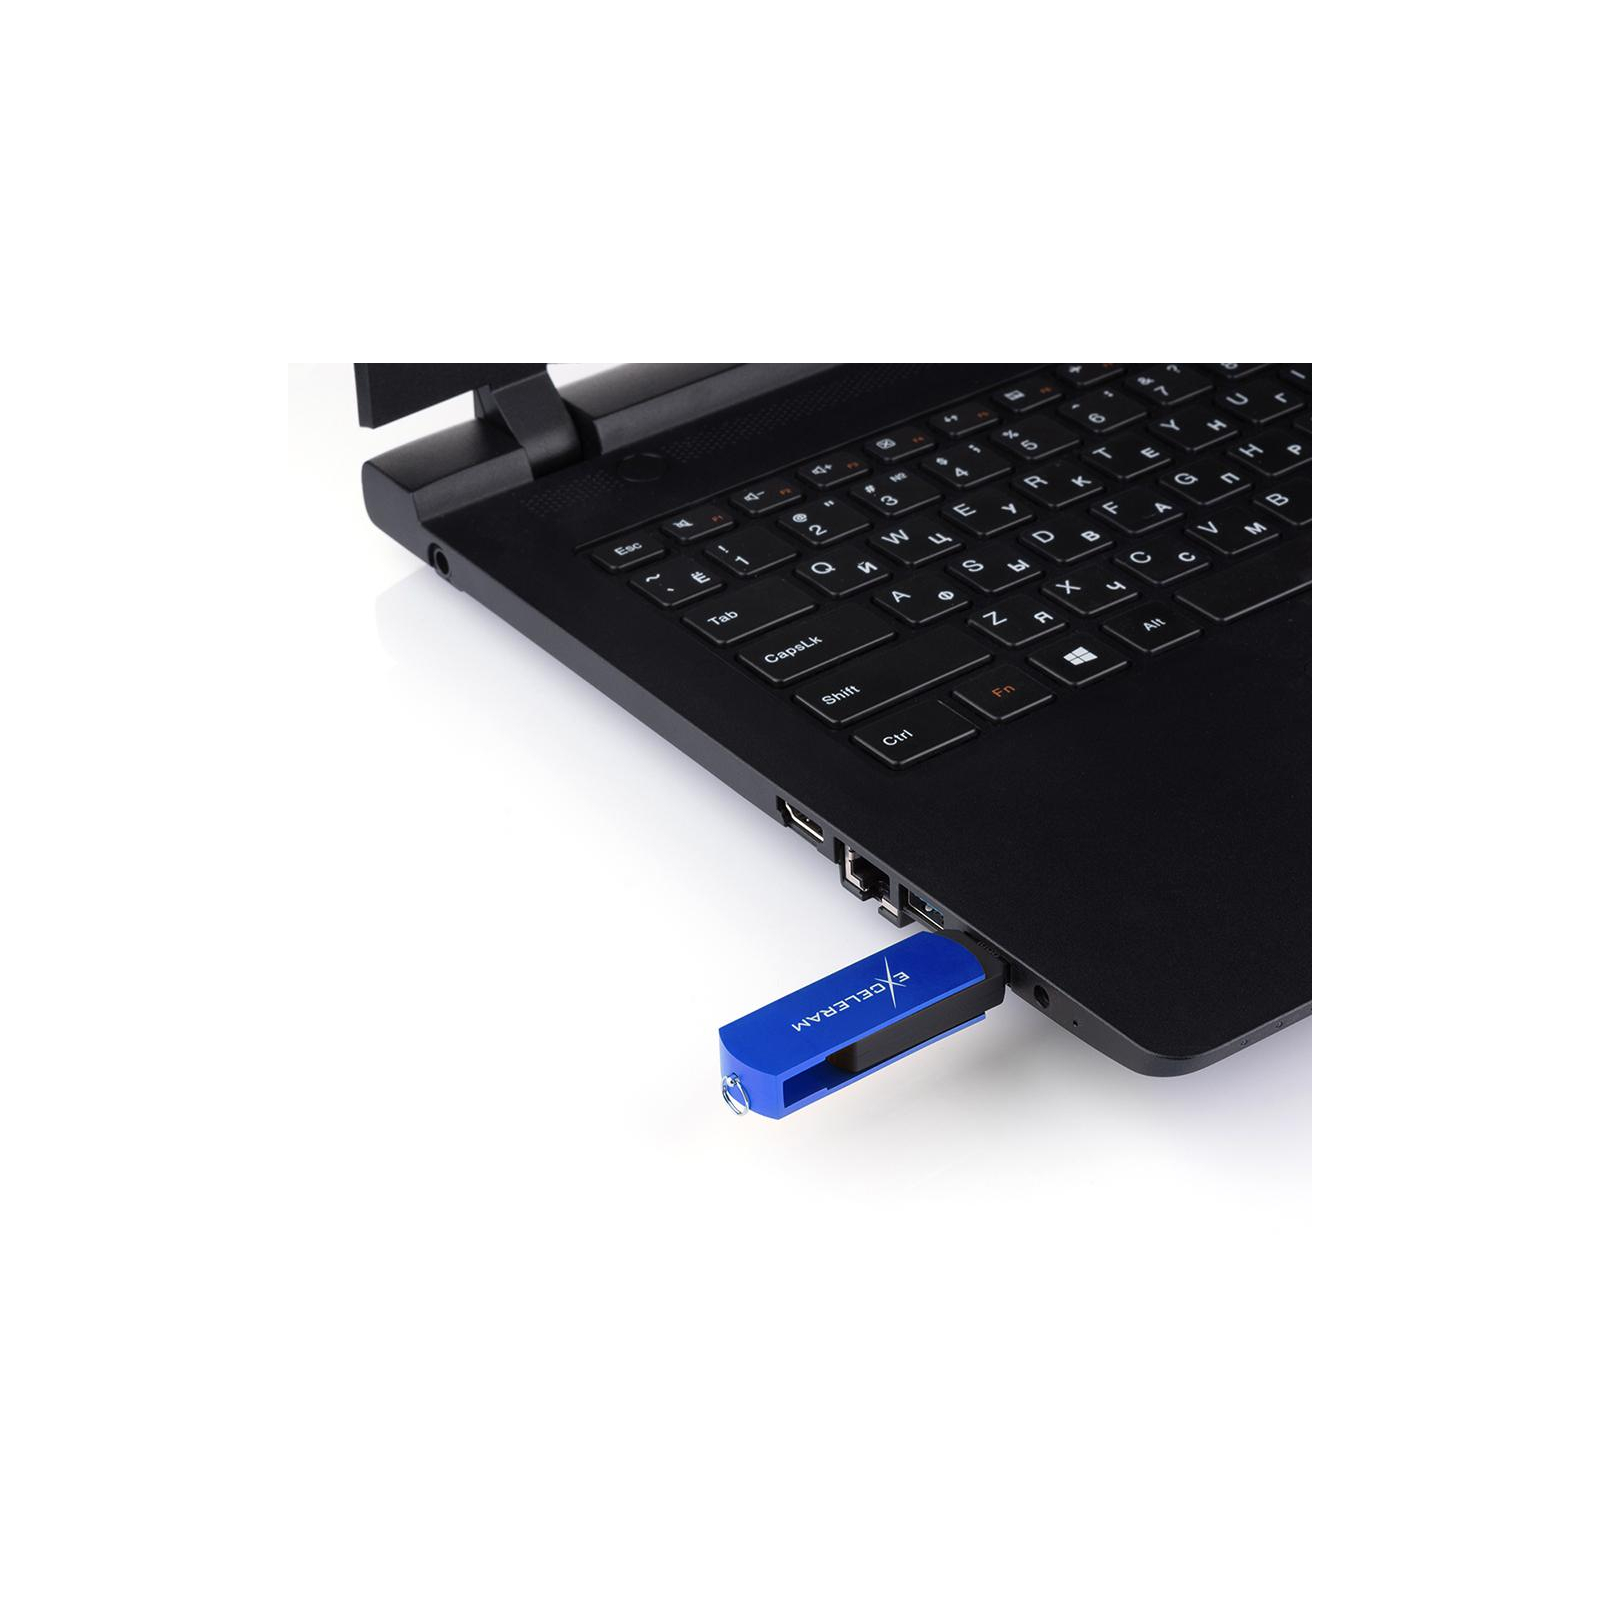 USB флеш накопитель eXceleram 8GB P2 Series Blue/Black USB 2.0 (EXP2U2BLB08) изображение 7